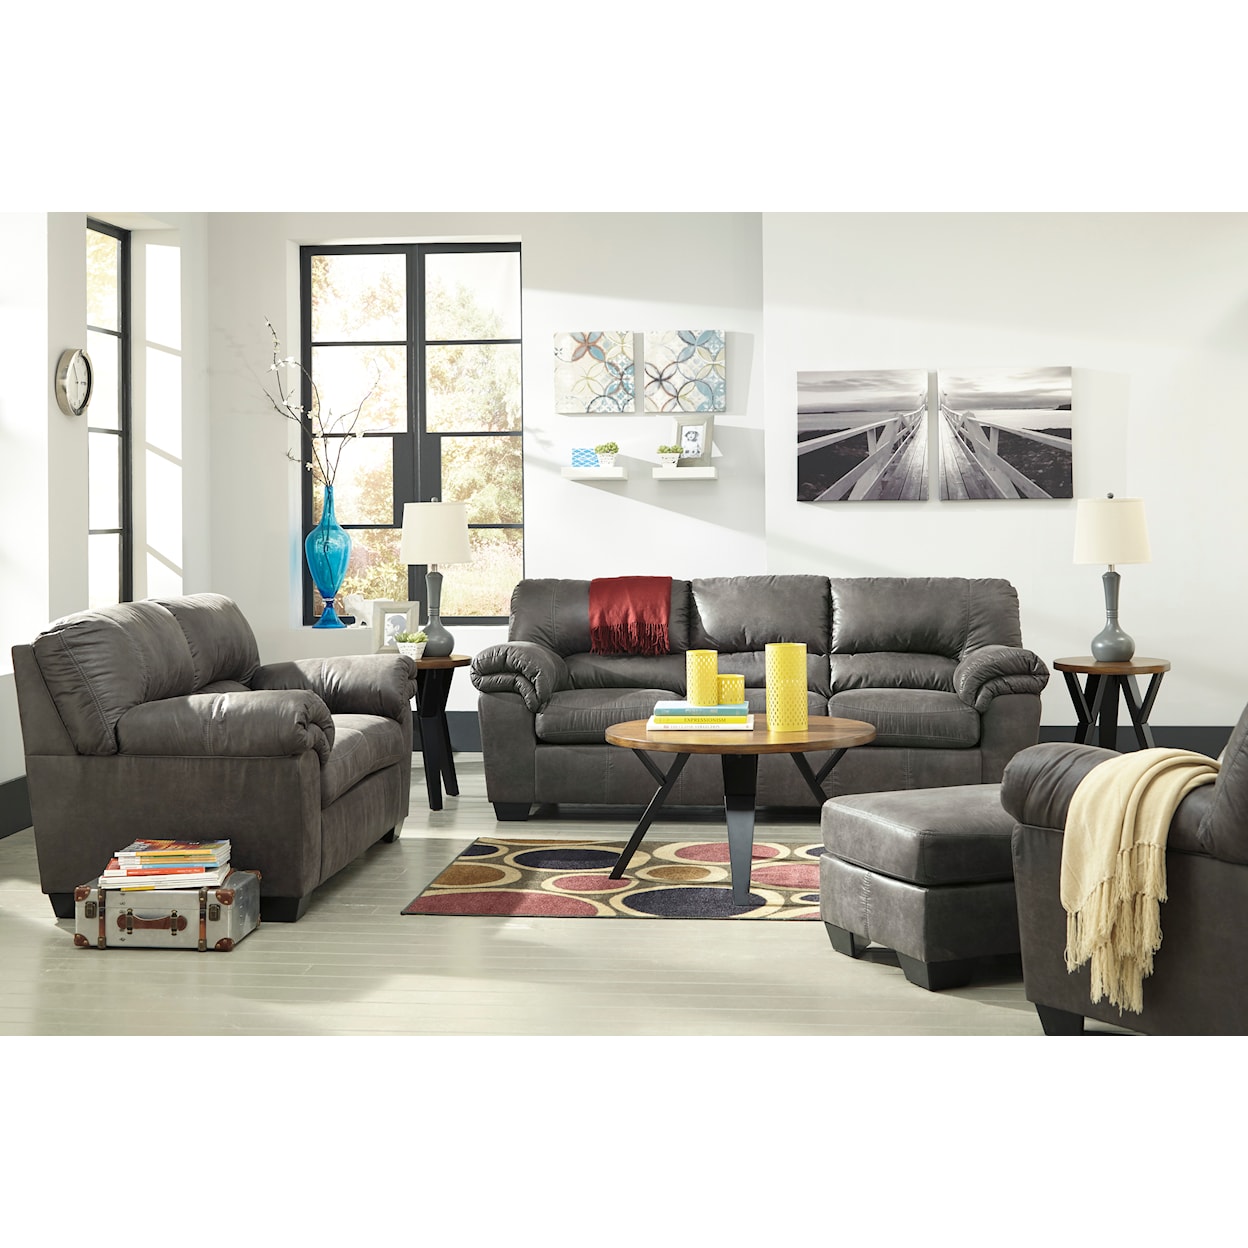 Ashley Furniture Signature Design Bladen Sofa, Loveseat, Chair, and Ottoman